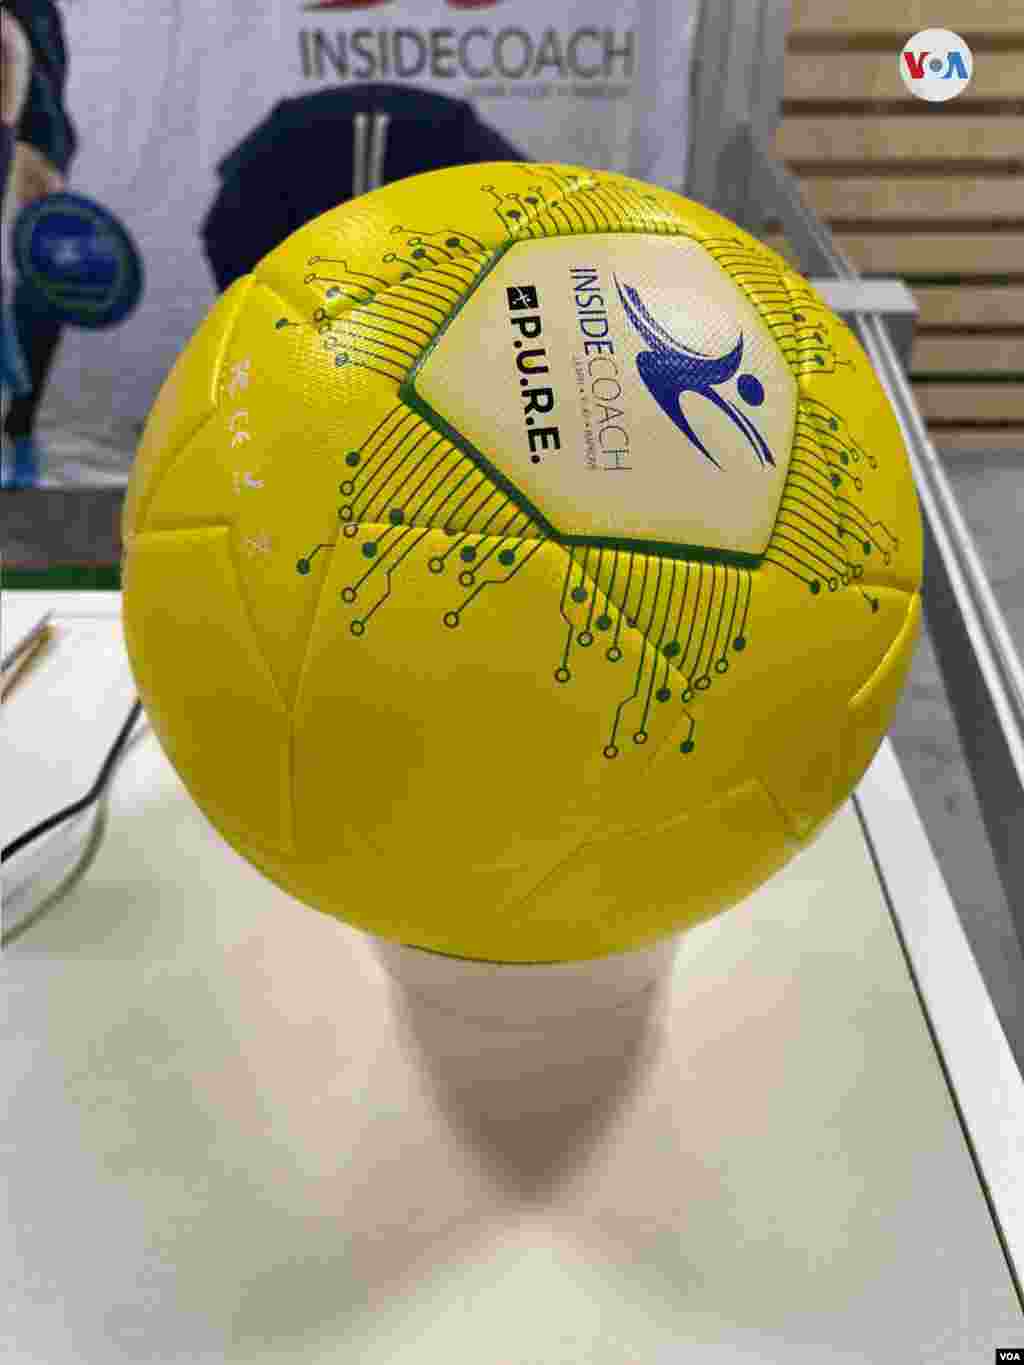 Este bal&#243;n &quot;inteligente&quot; muestra la mejor manera manipularlo en el deporte. Iacopo D Luzi/VOA.